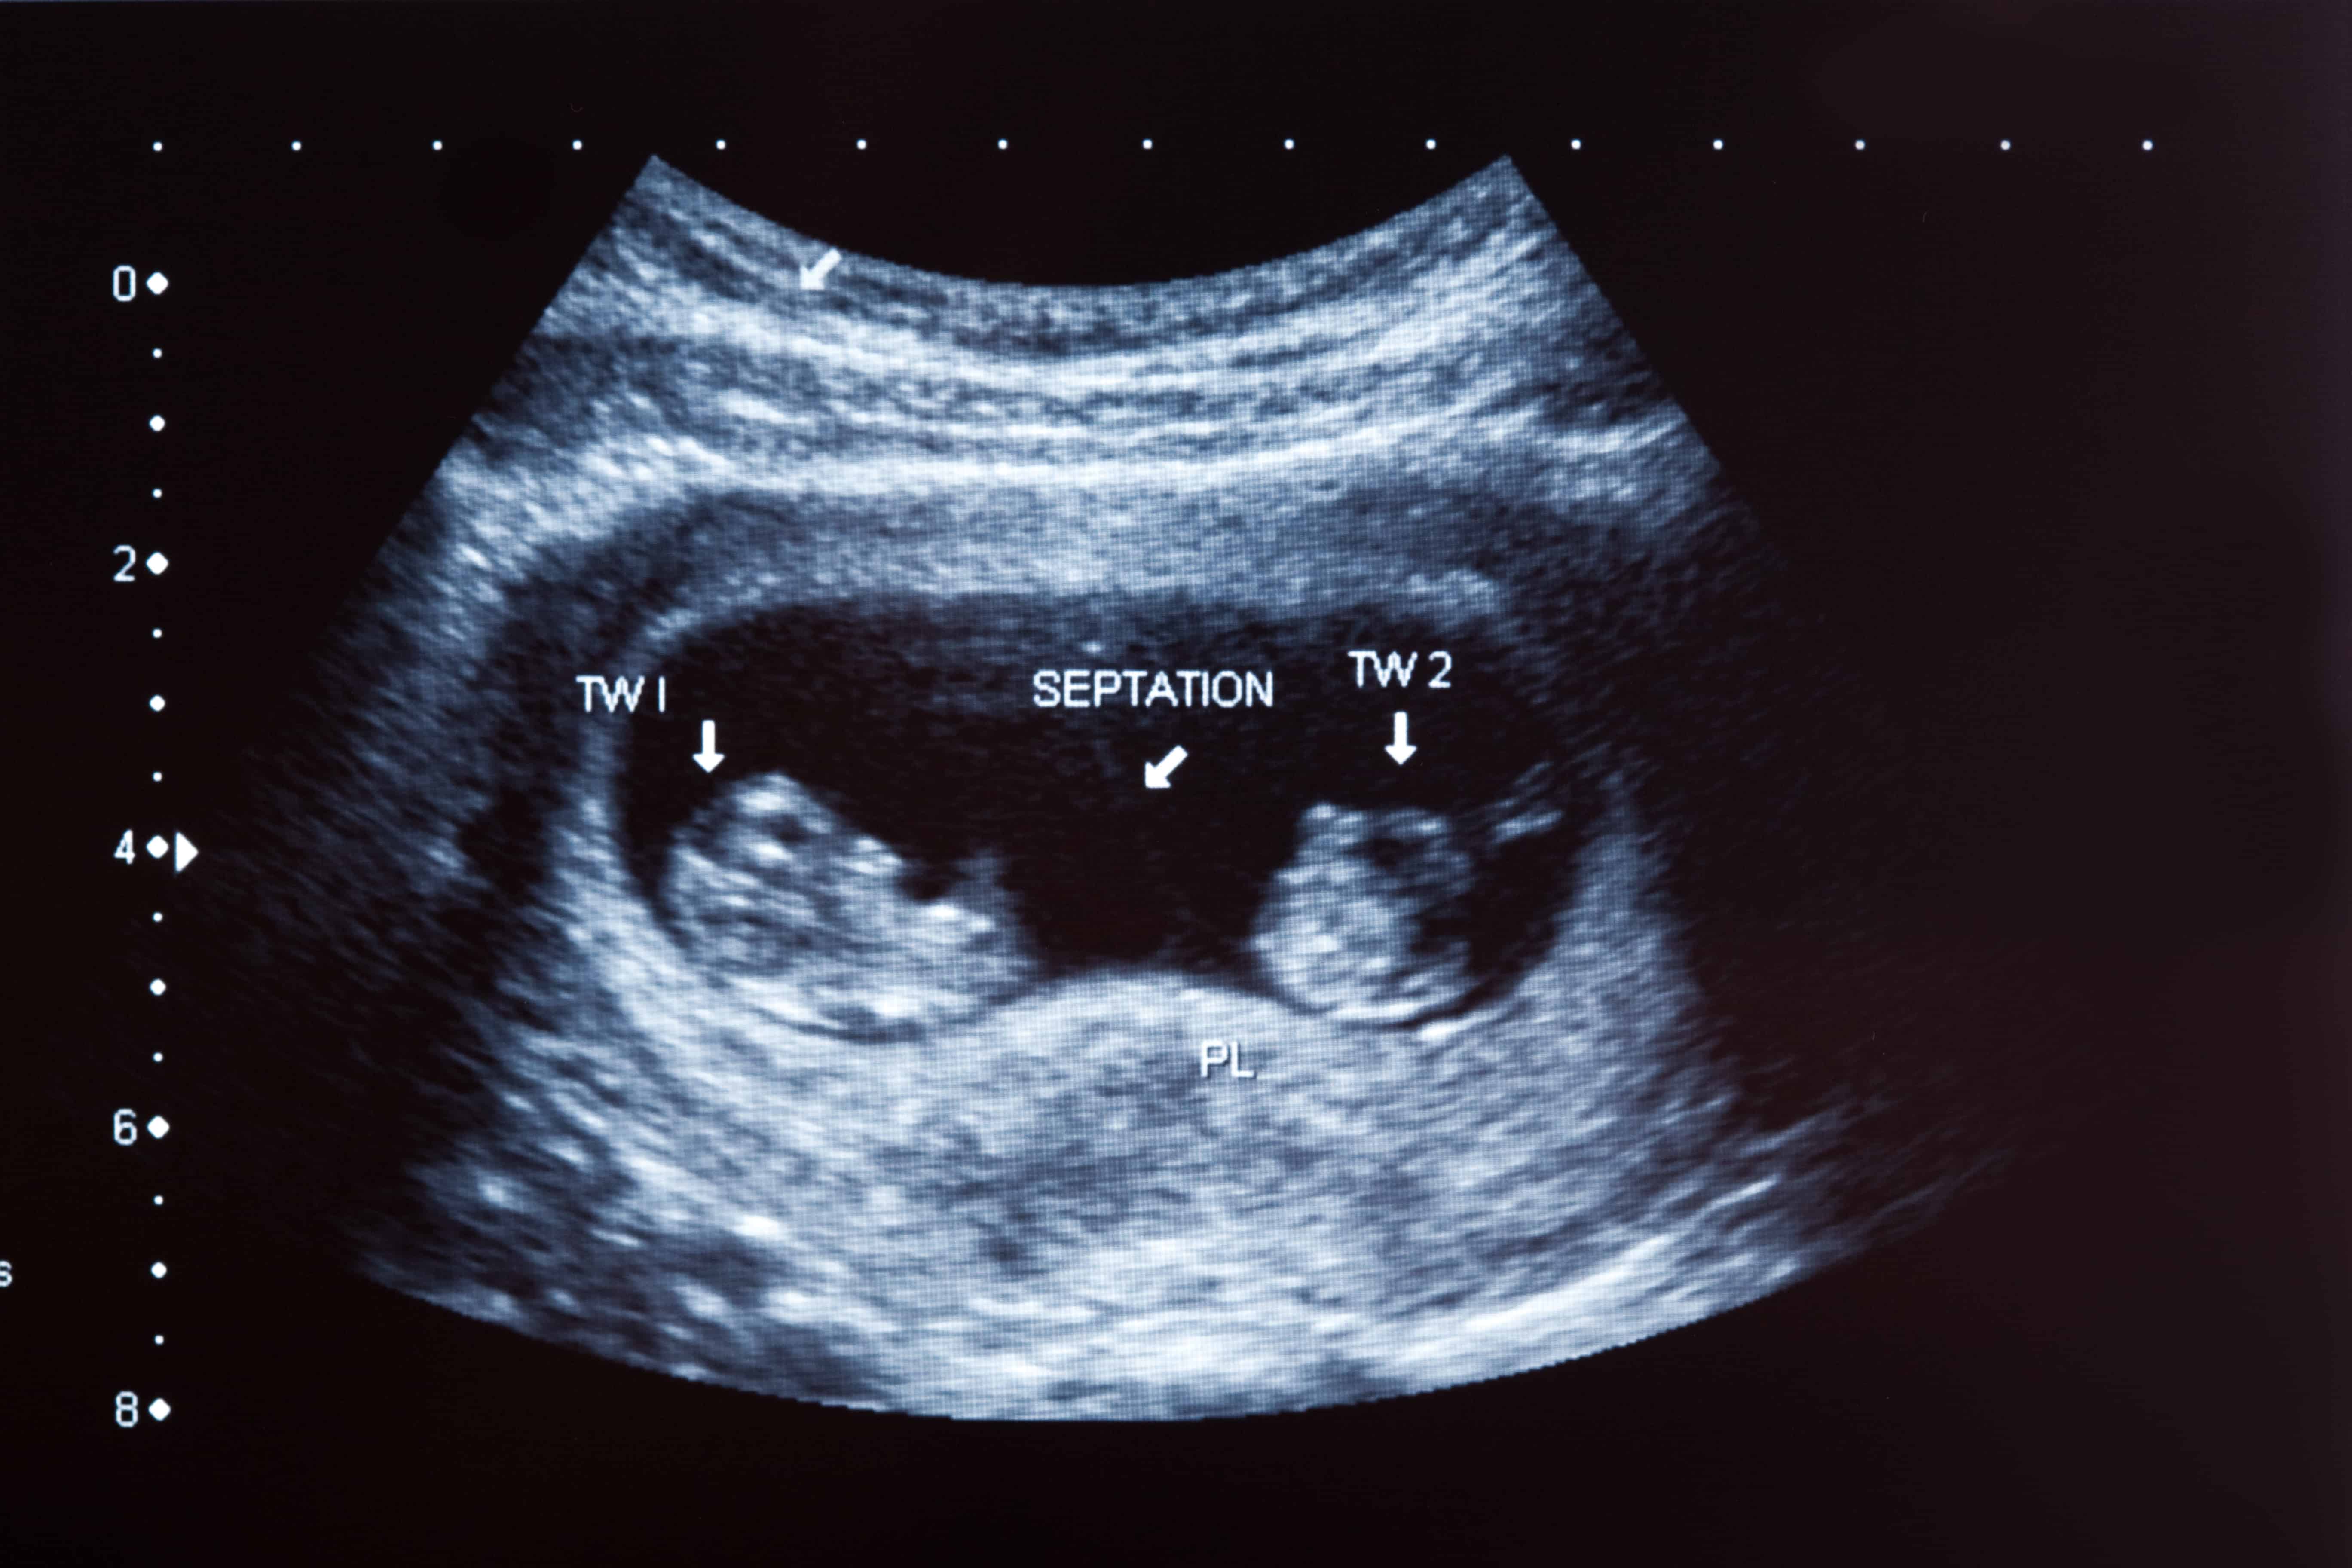 screening ultrasounds